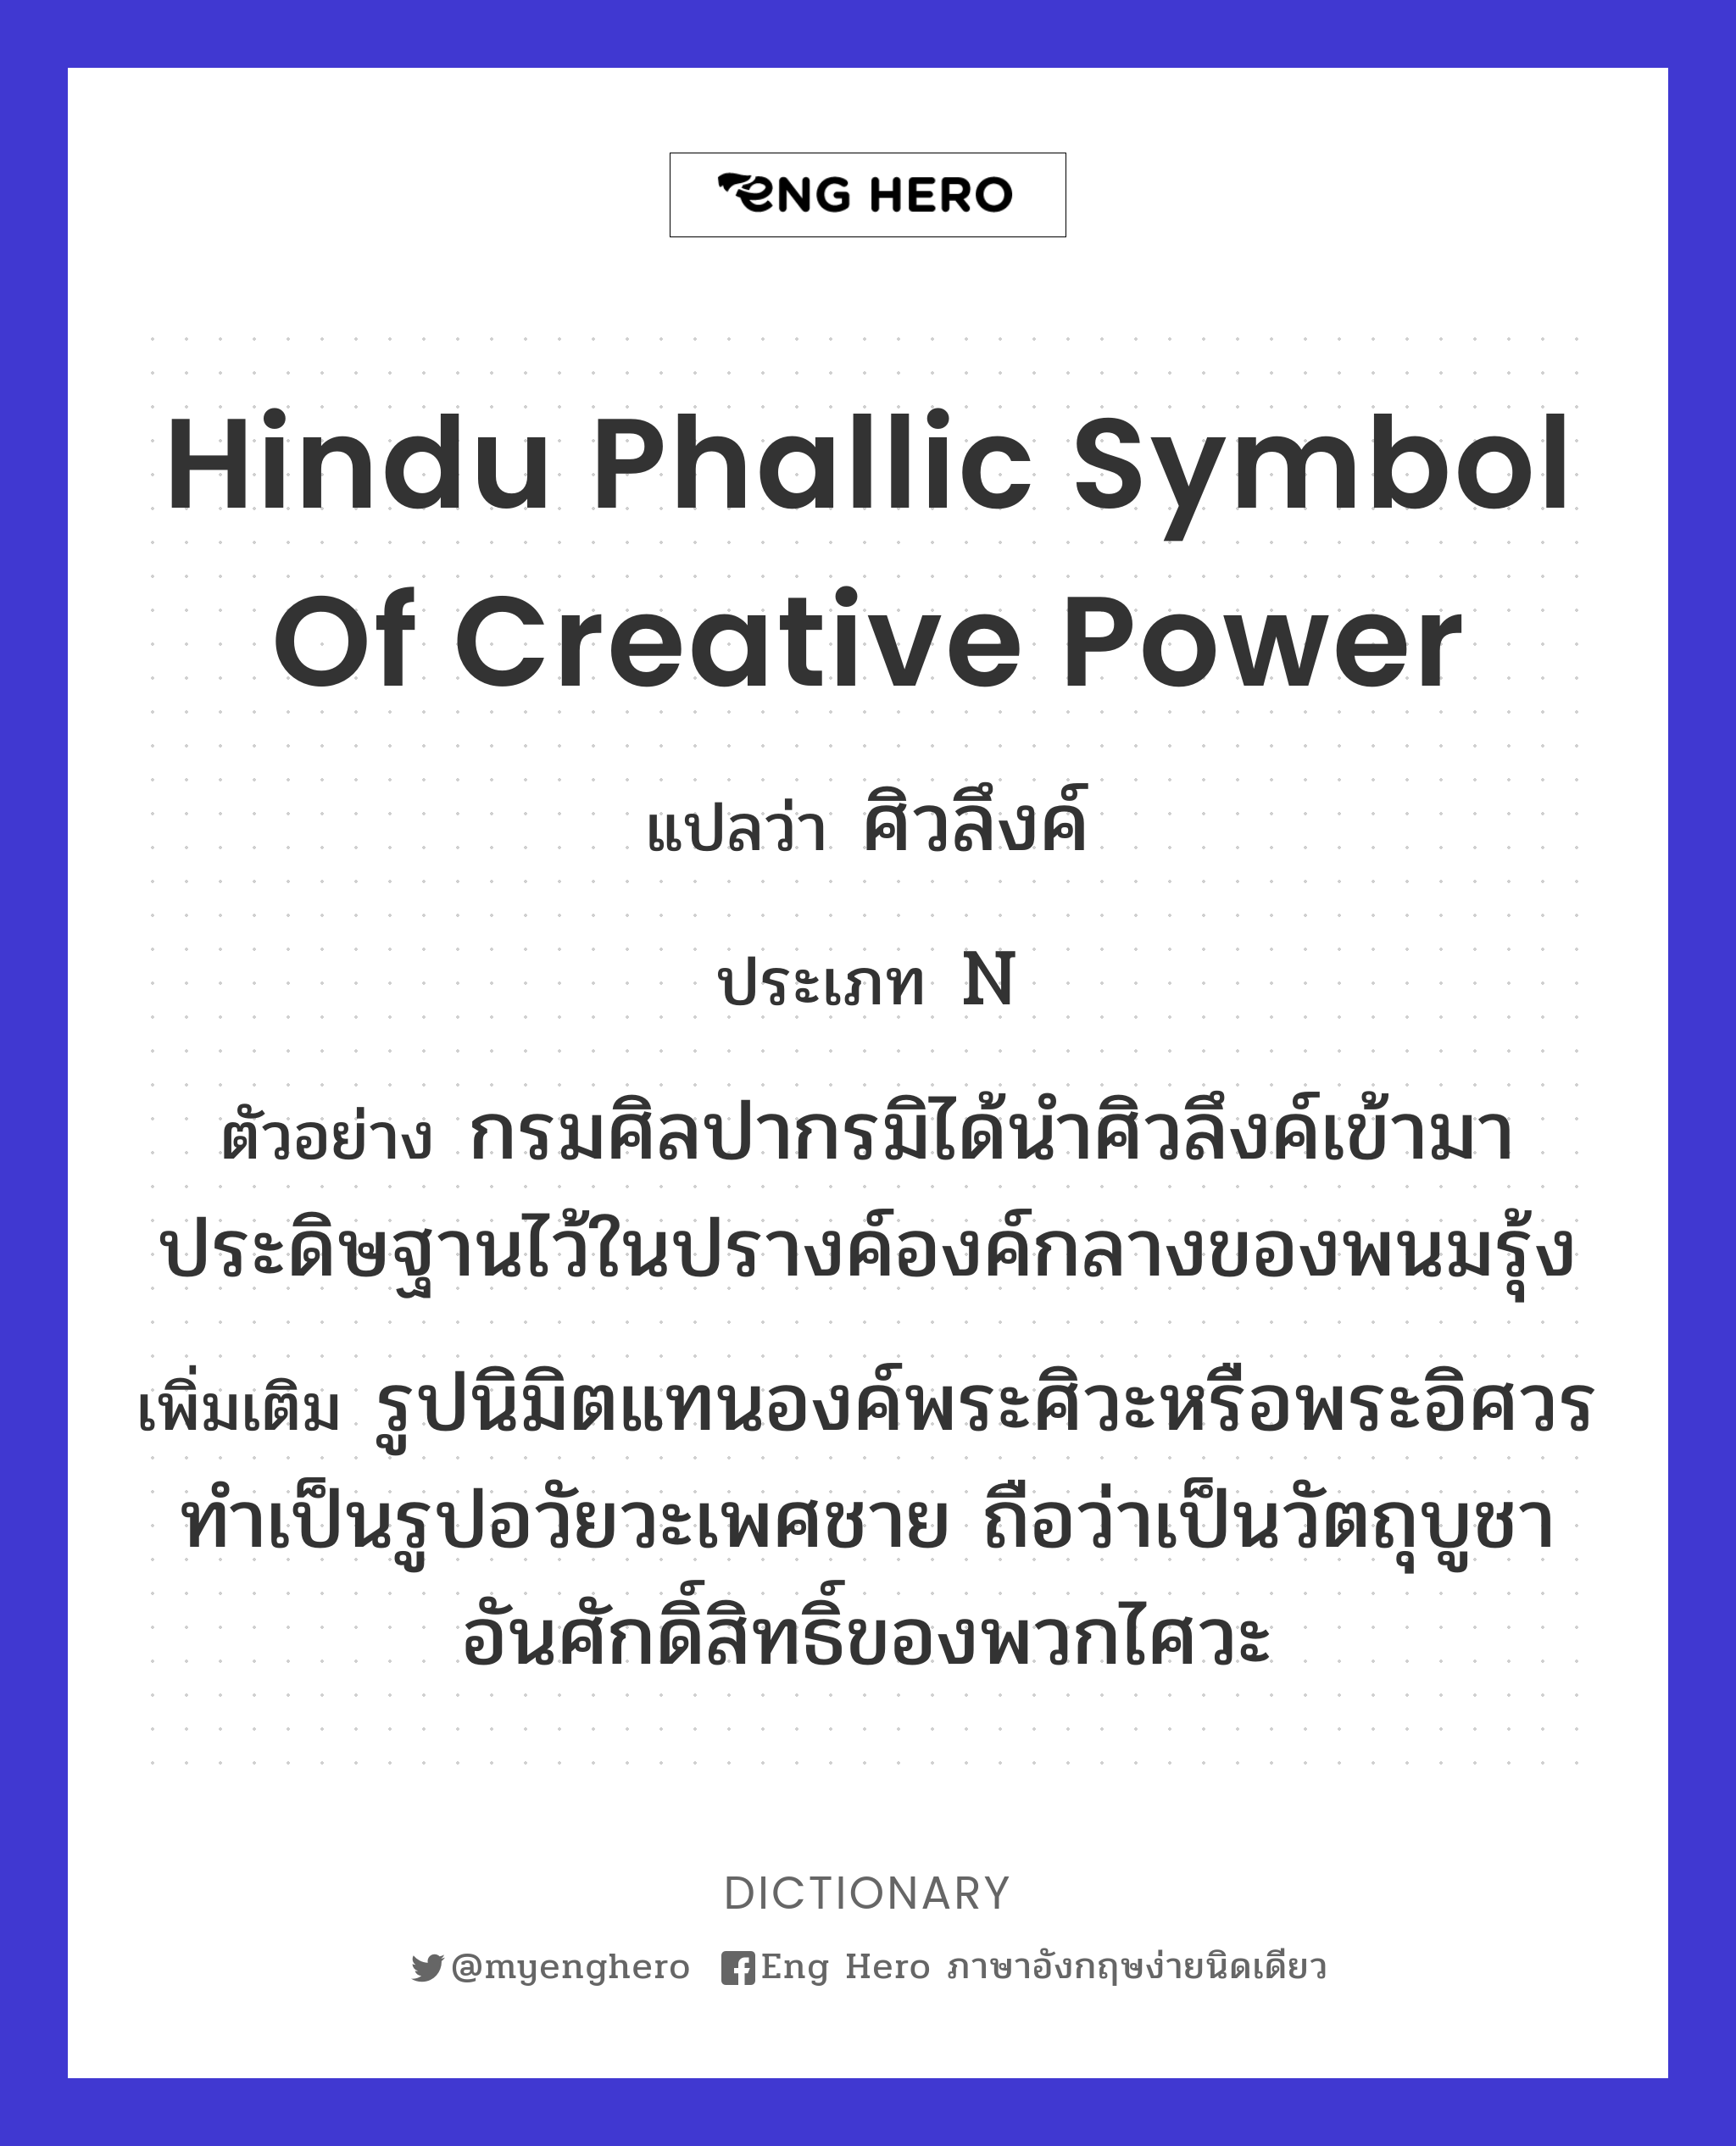 Hindu phallic symbol of creative power